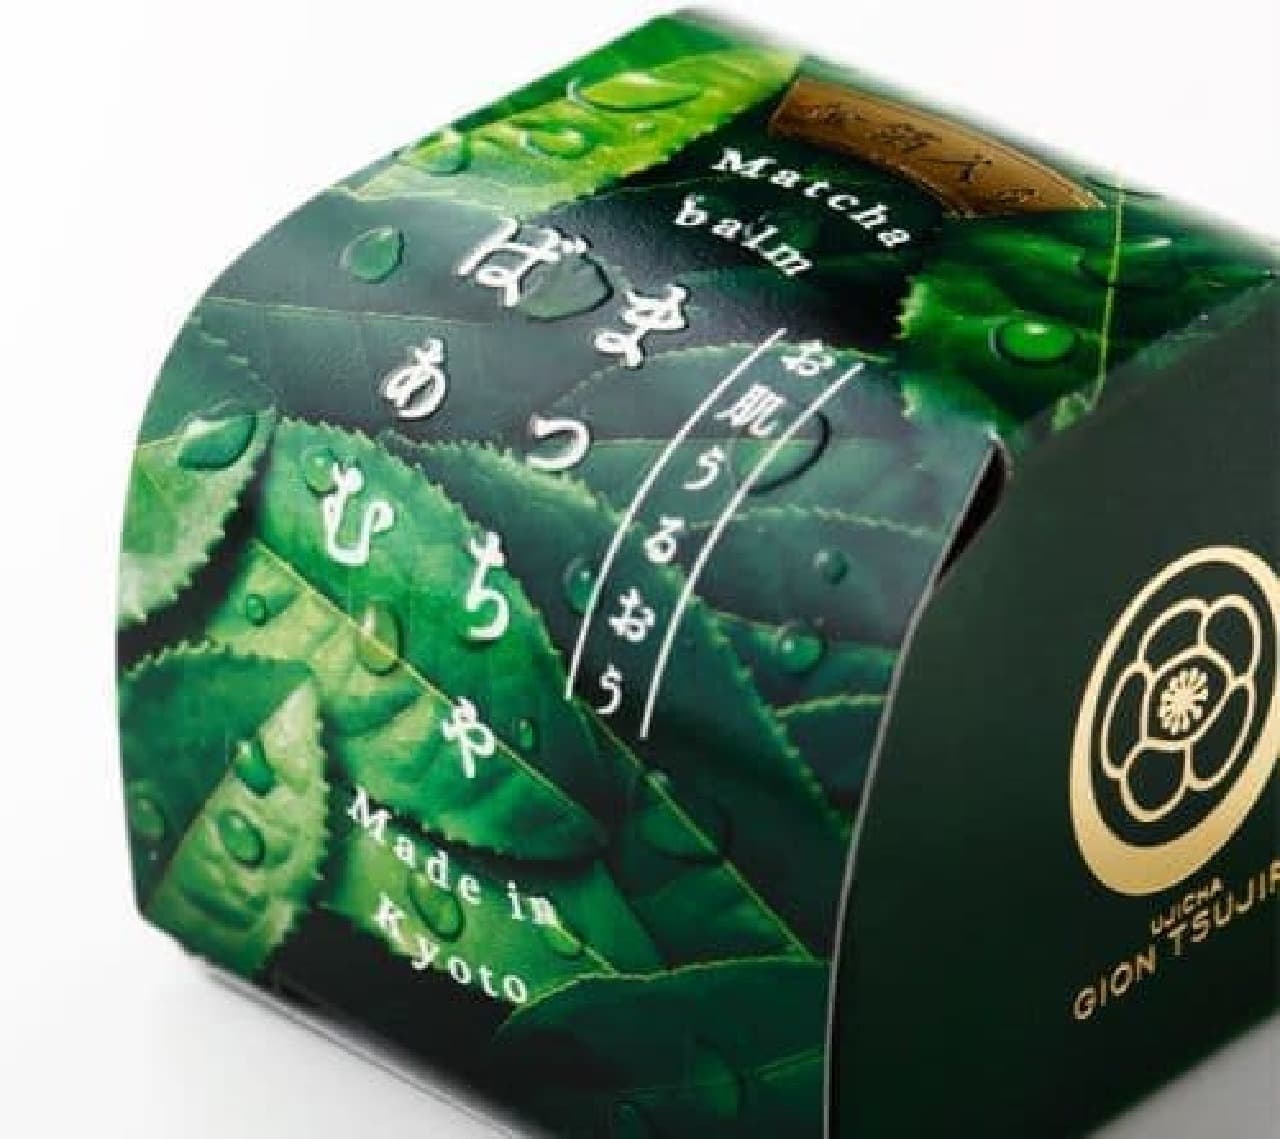 "Matcha Baum" is a skin care cream that uses Gion Tsujiri's finest matcha "Kento no Mukashi".